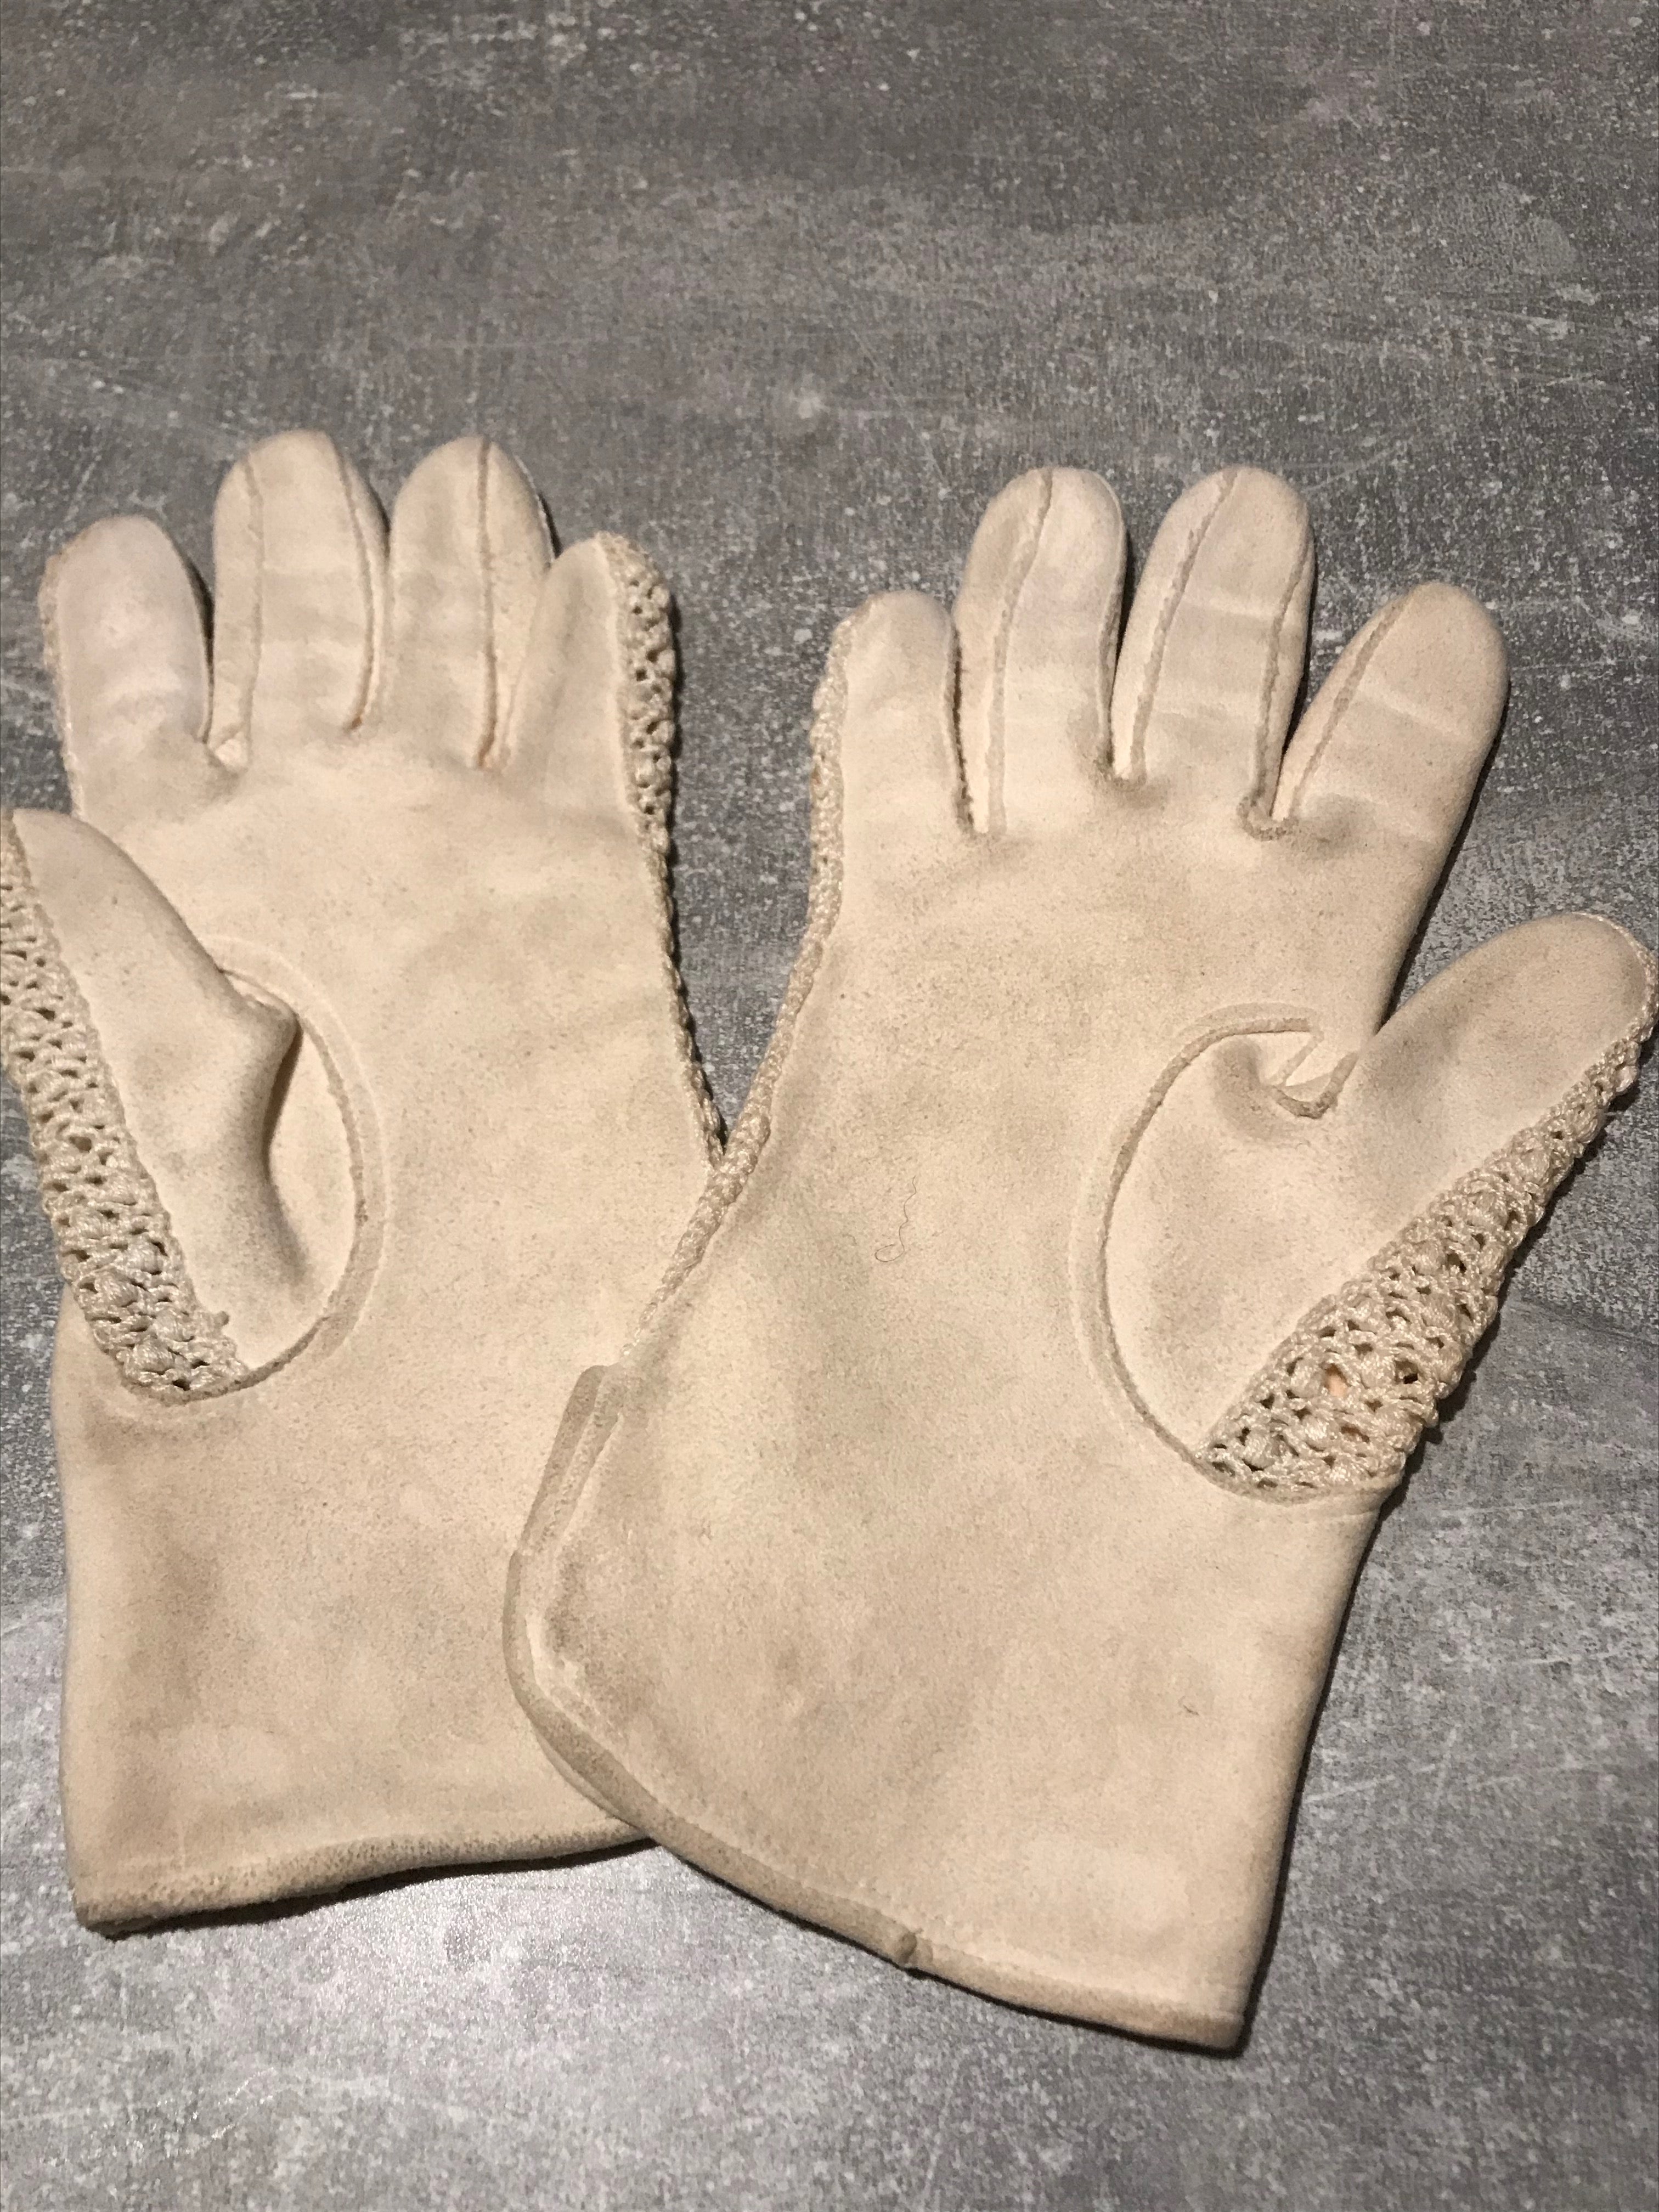 Vintage Handschuhe Autofahrerhandschuh